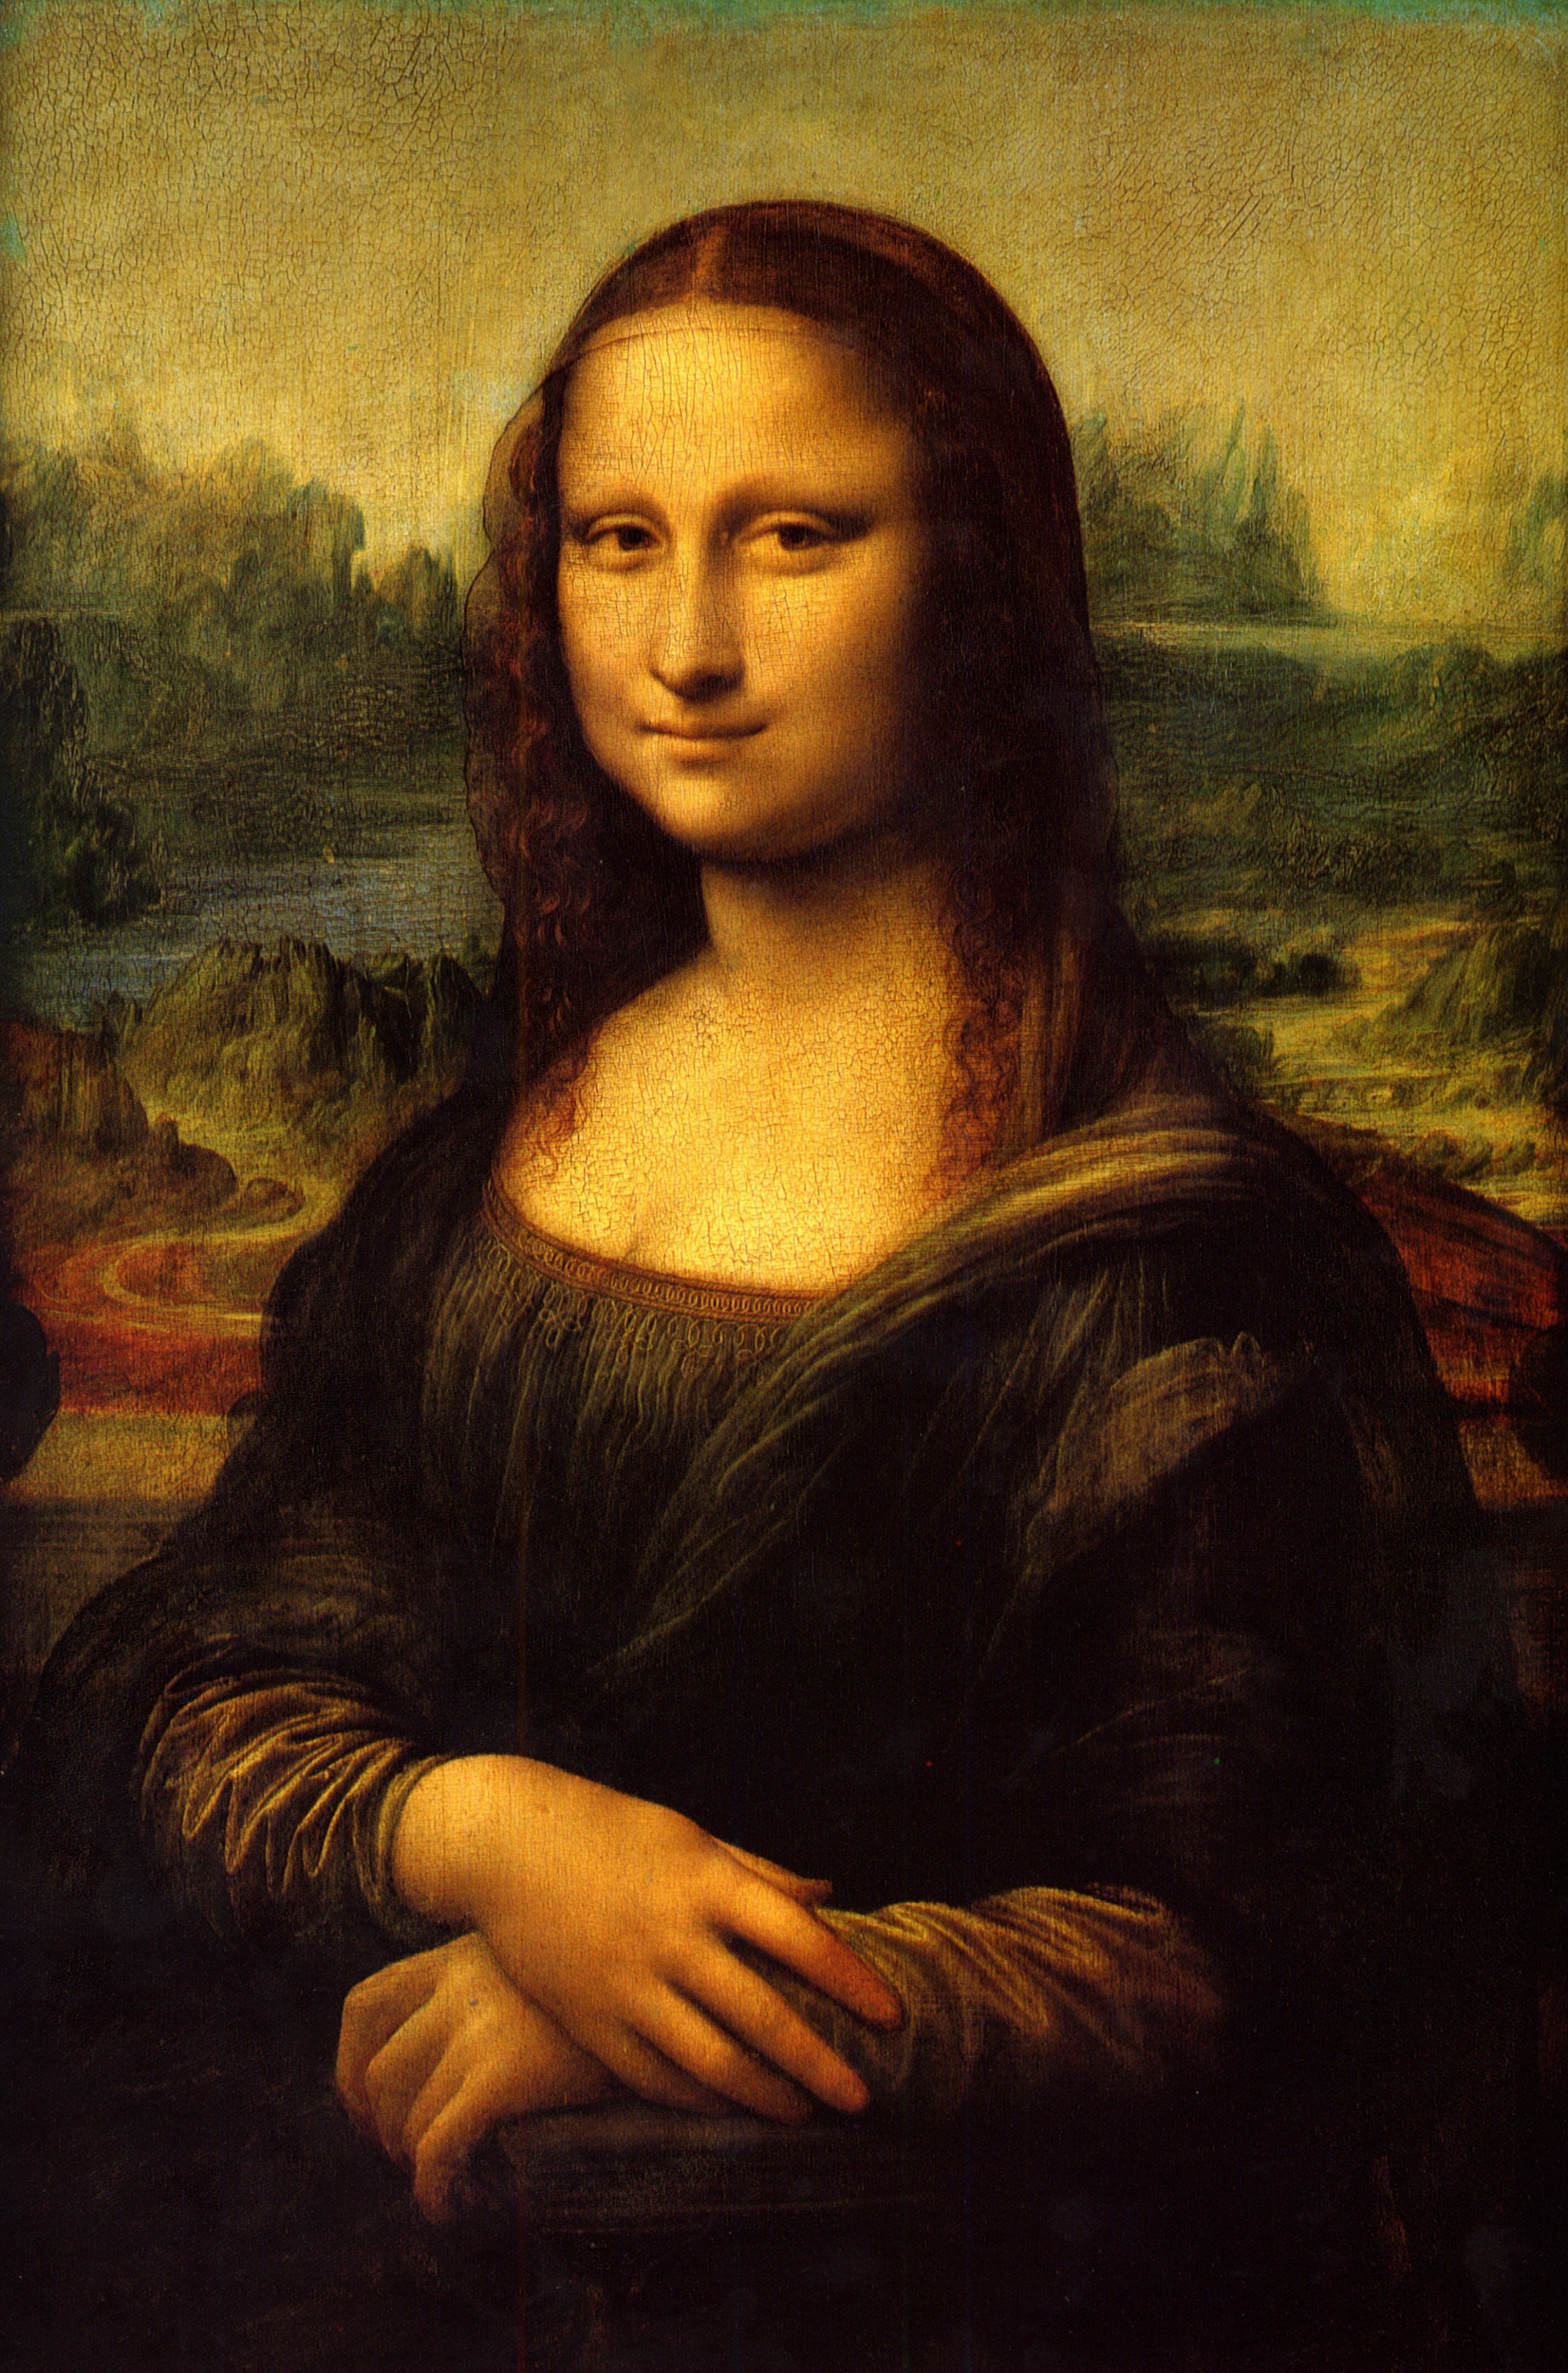 The Mona Lisa (La Gioconda)